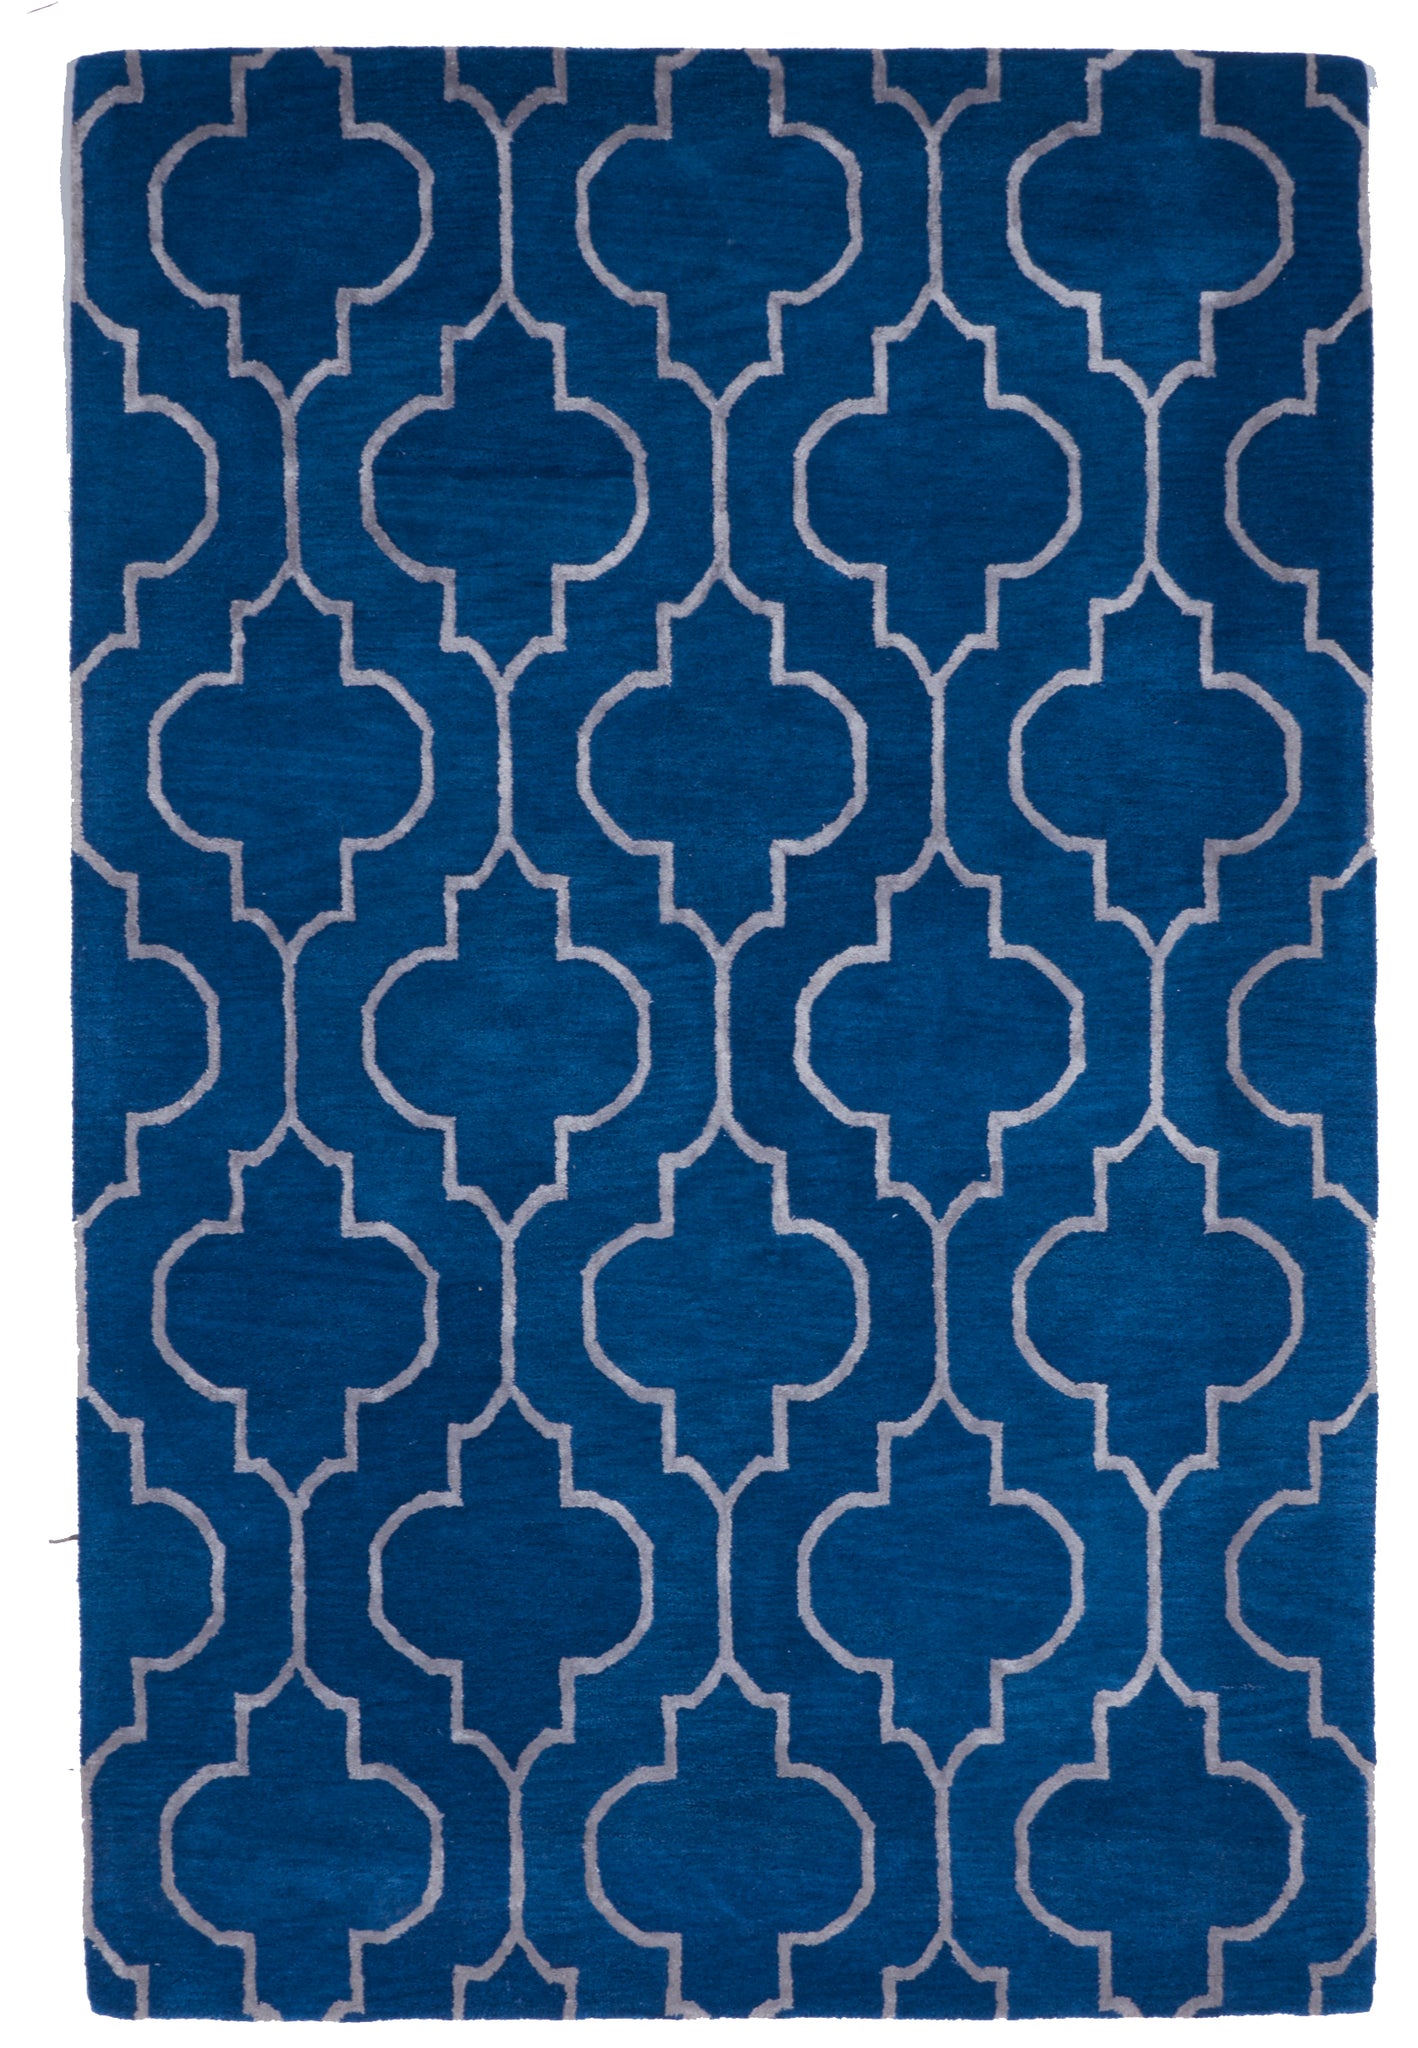 Transitional Tufted Blue Gray Wool Rug 5'9 x 8'9 - IGotYourRug